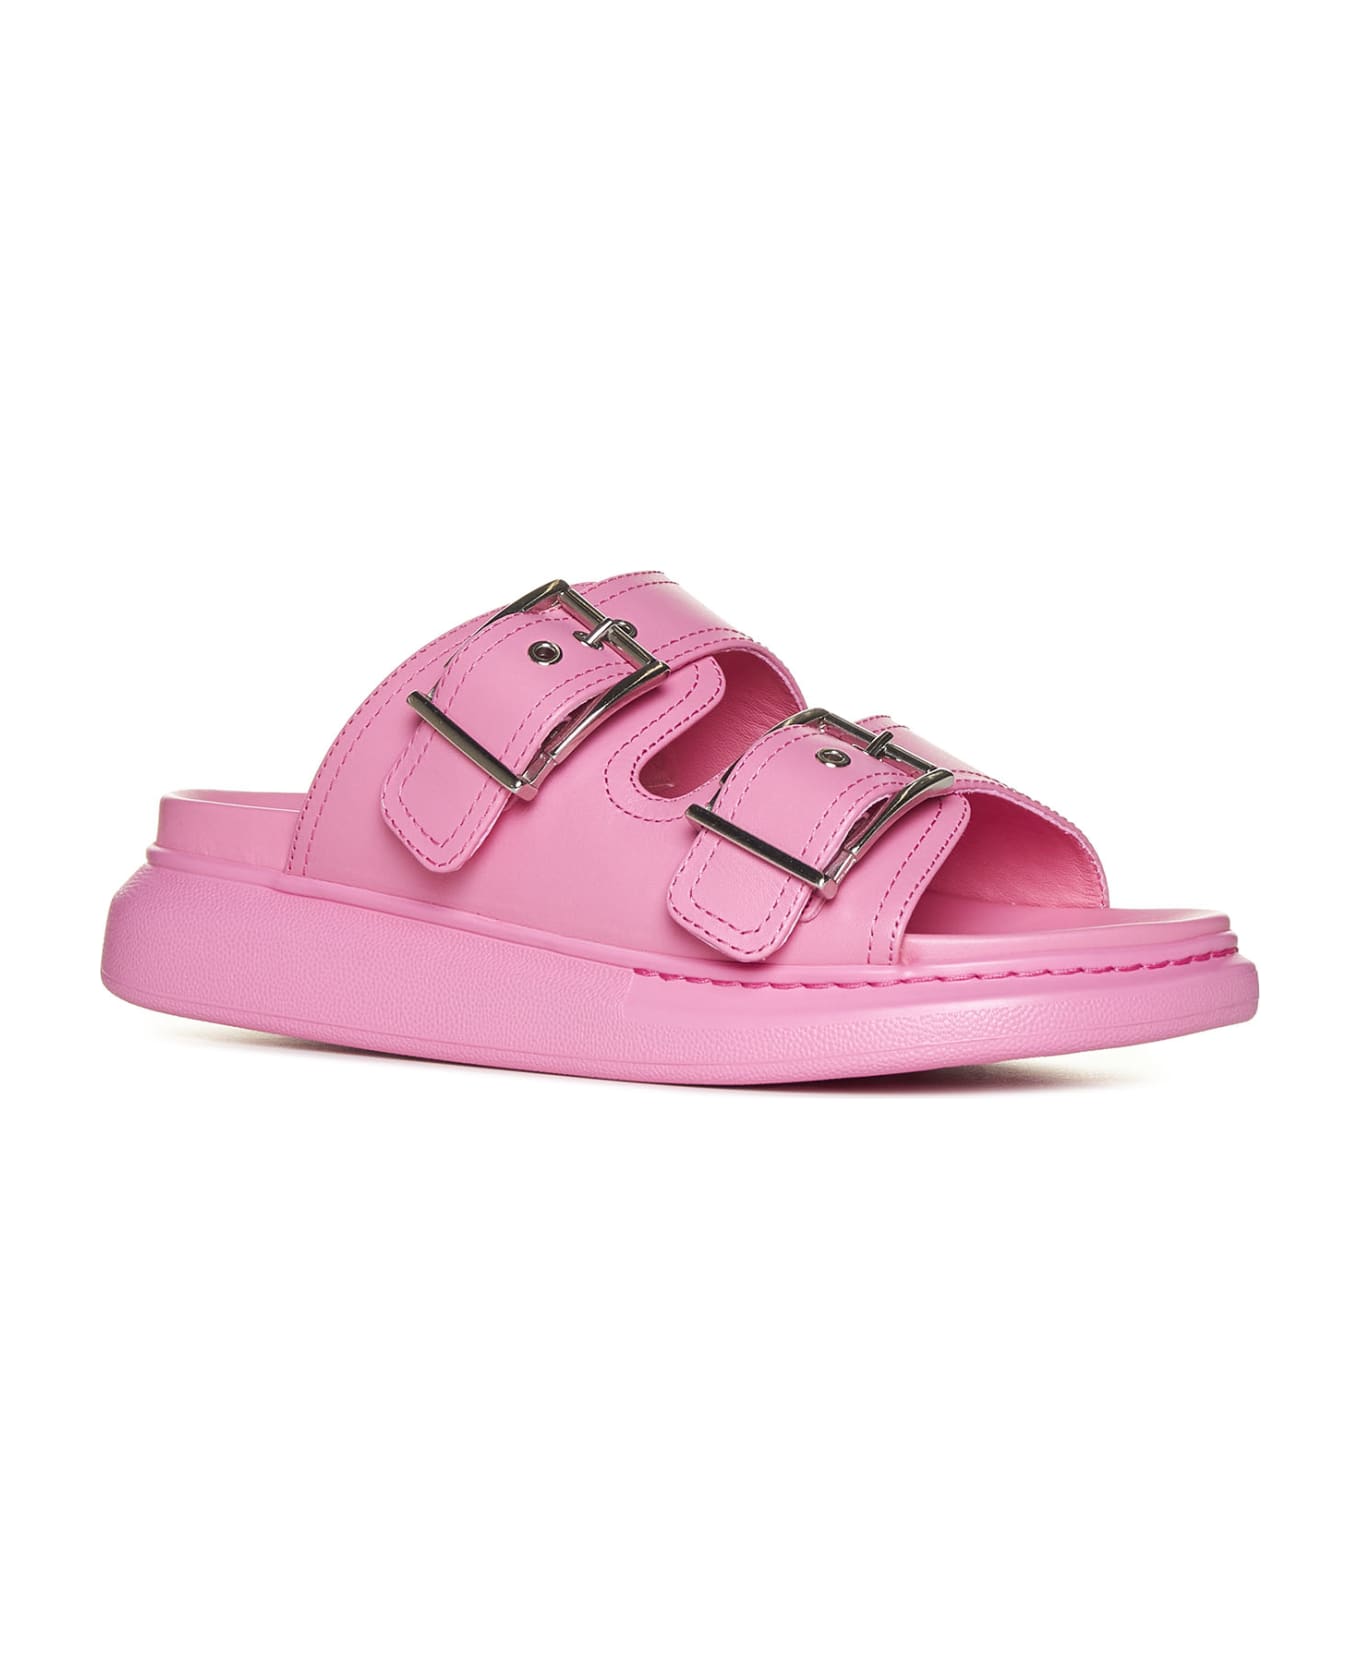 Alexander McQueen Pink And Silver Hybrid Sandal - Sugar Pink Silver